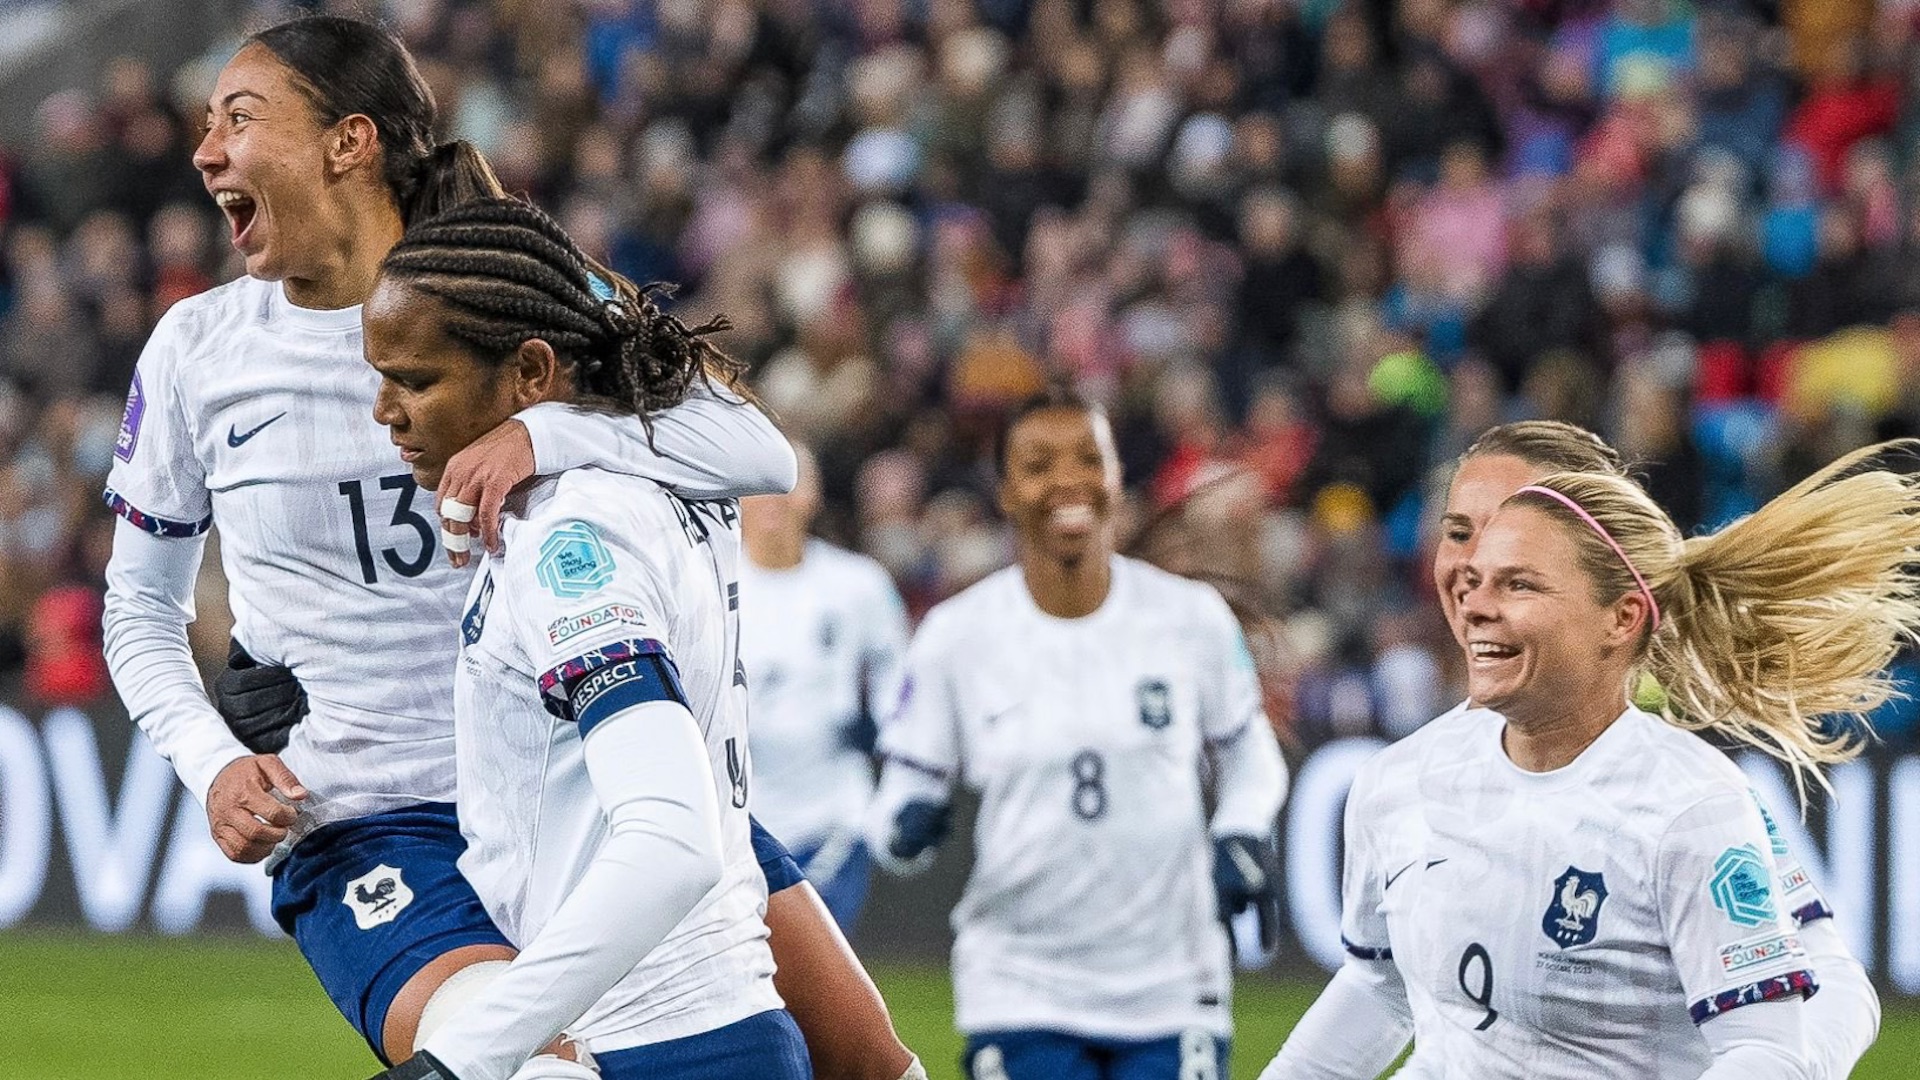 France-Allemagne : commentary voir ce choc de foot féminin en streaming ?